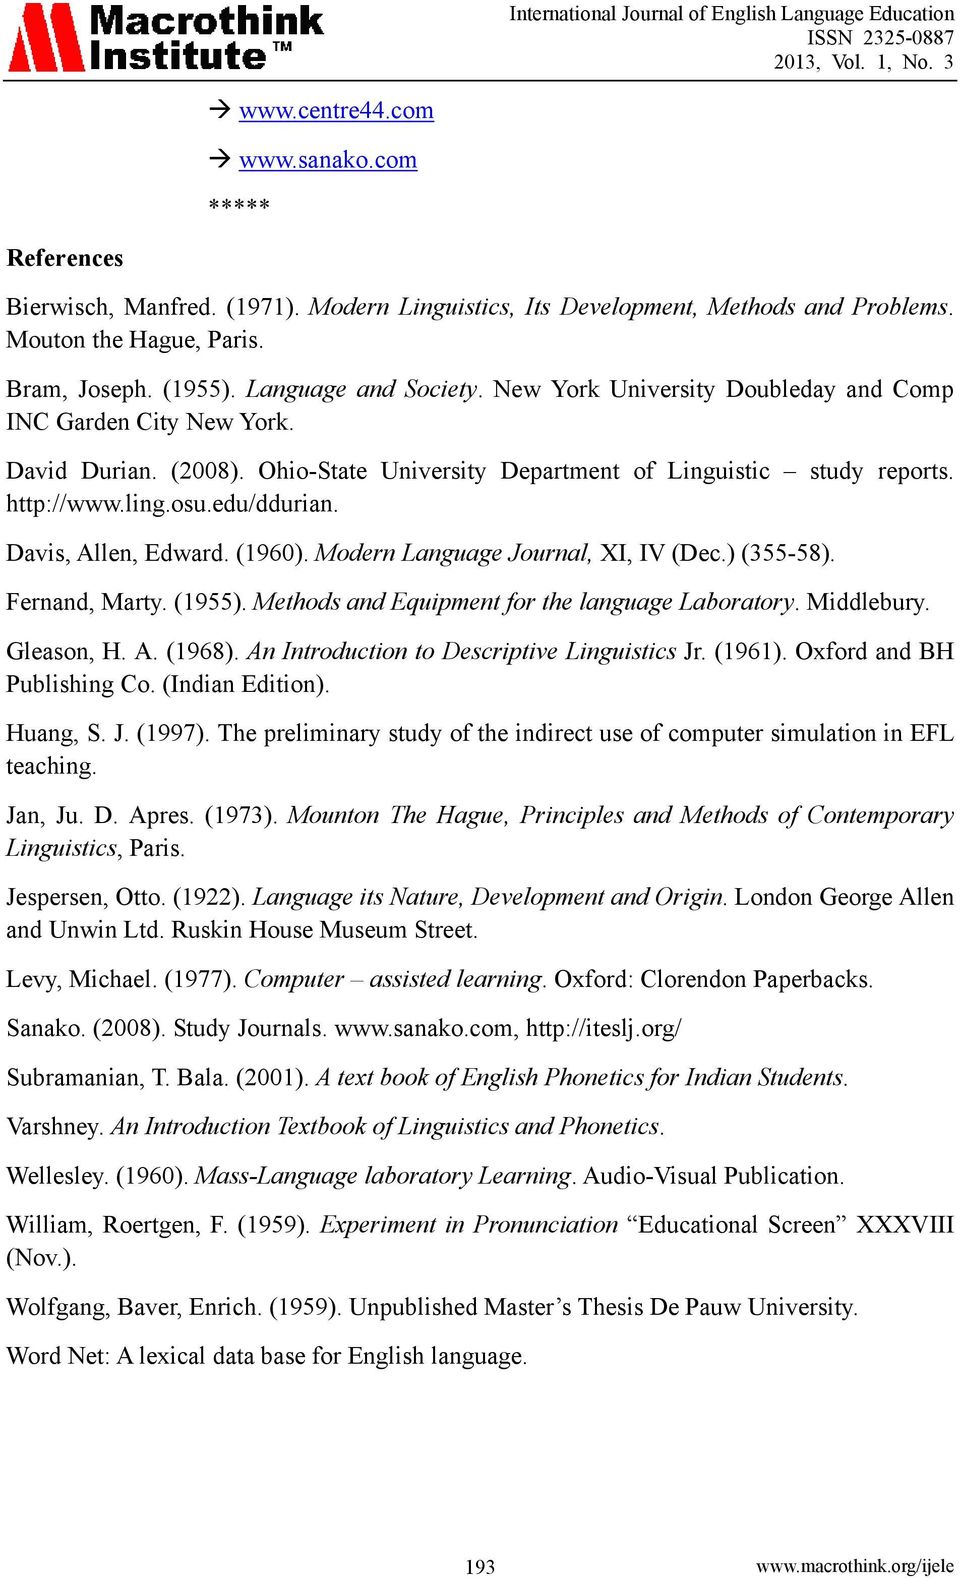 edu/ddurian. Davis, Allen, Edward. (1960). Modern Language Journal, XI, IV (Dec.) (355-58). Fernand, Marty. (1955). Methods and Equipment for the language Laboratory. Middlebury. Gleason, H. A. (1968).